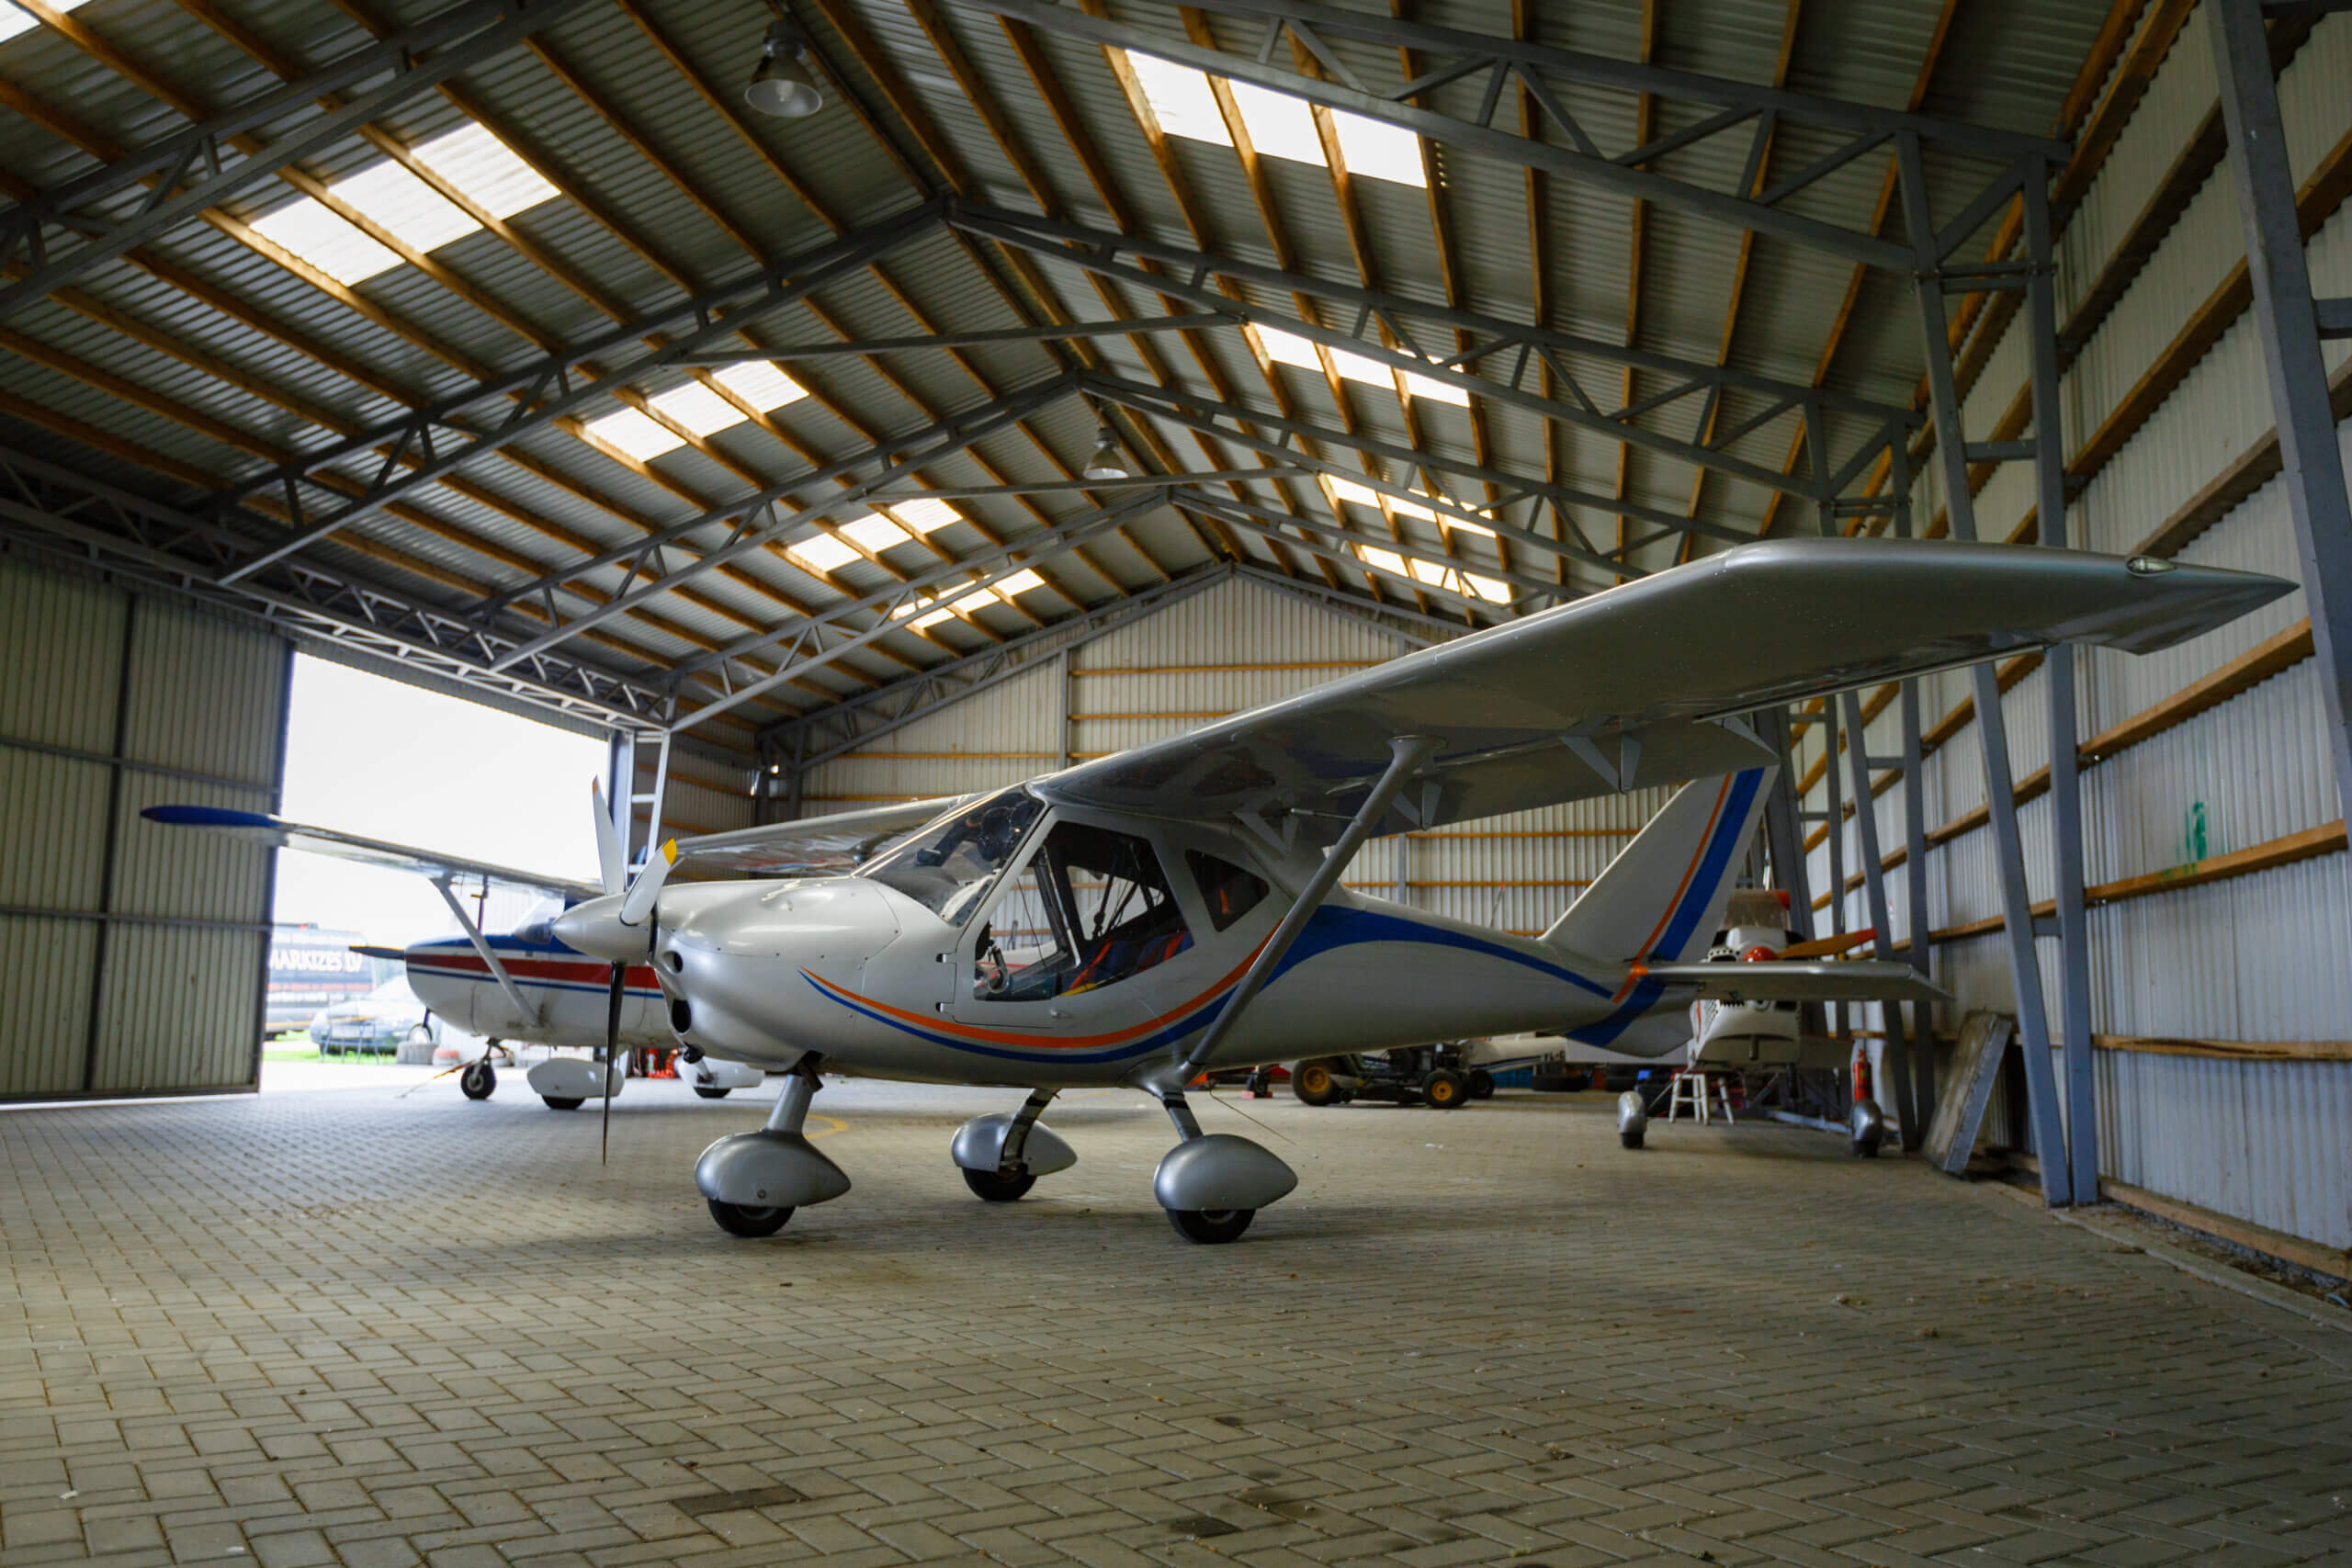 An-interior-shot-of-small-plane-standing-in-aviation-metal-hangar